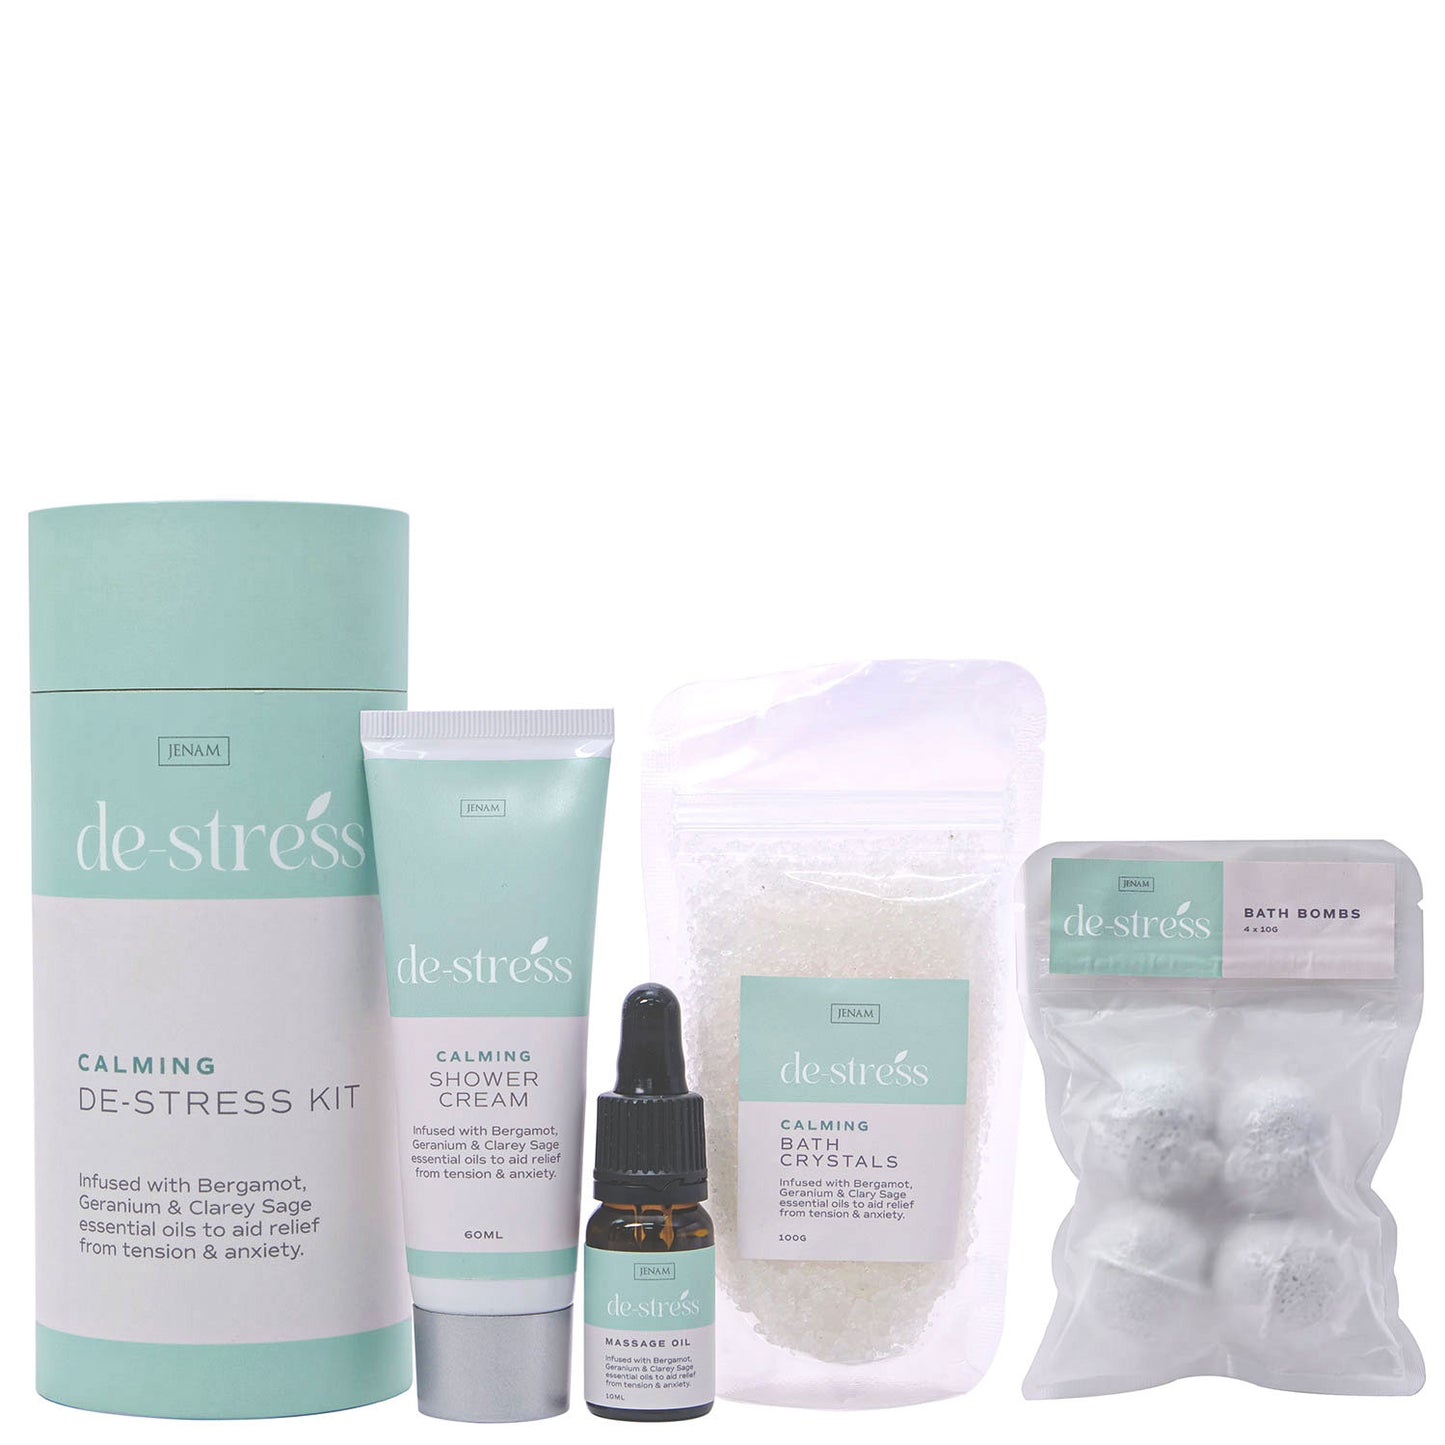 Jenam Wellness De - Stress Kit - 10ml Massage Oil, 60ml Shower Cream, 4 X 10g Bath Bombs & 100g Bath Crystals